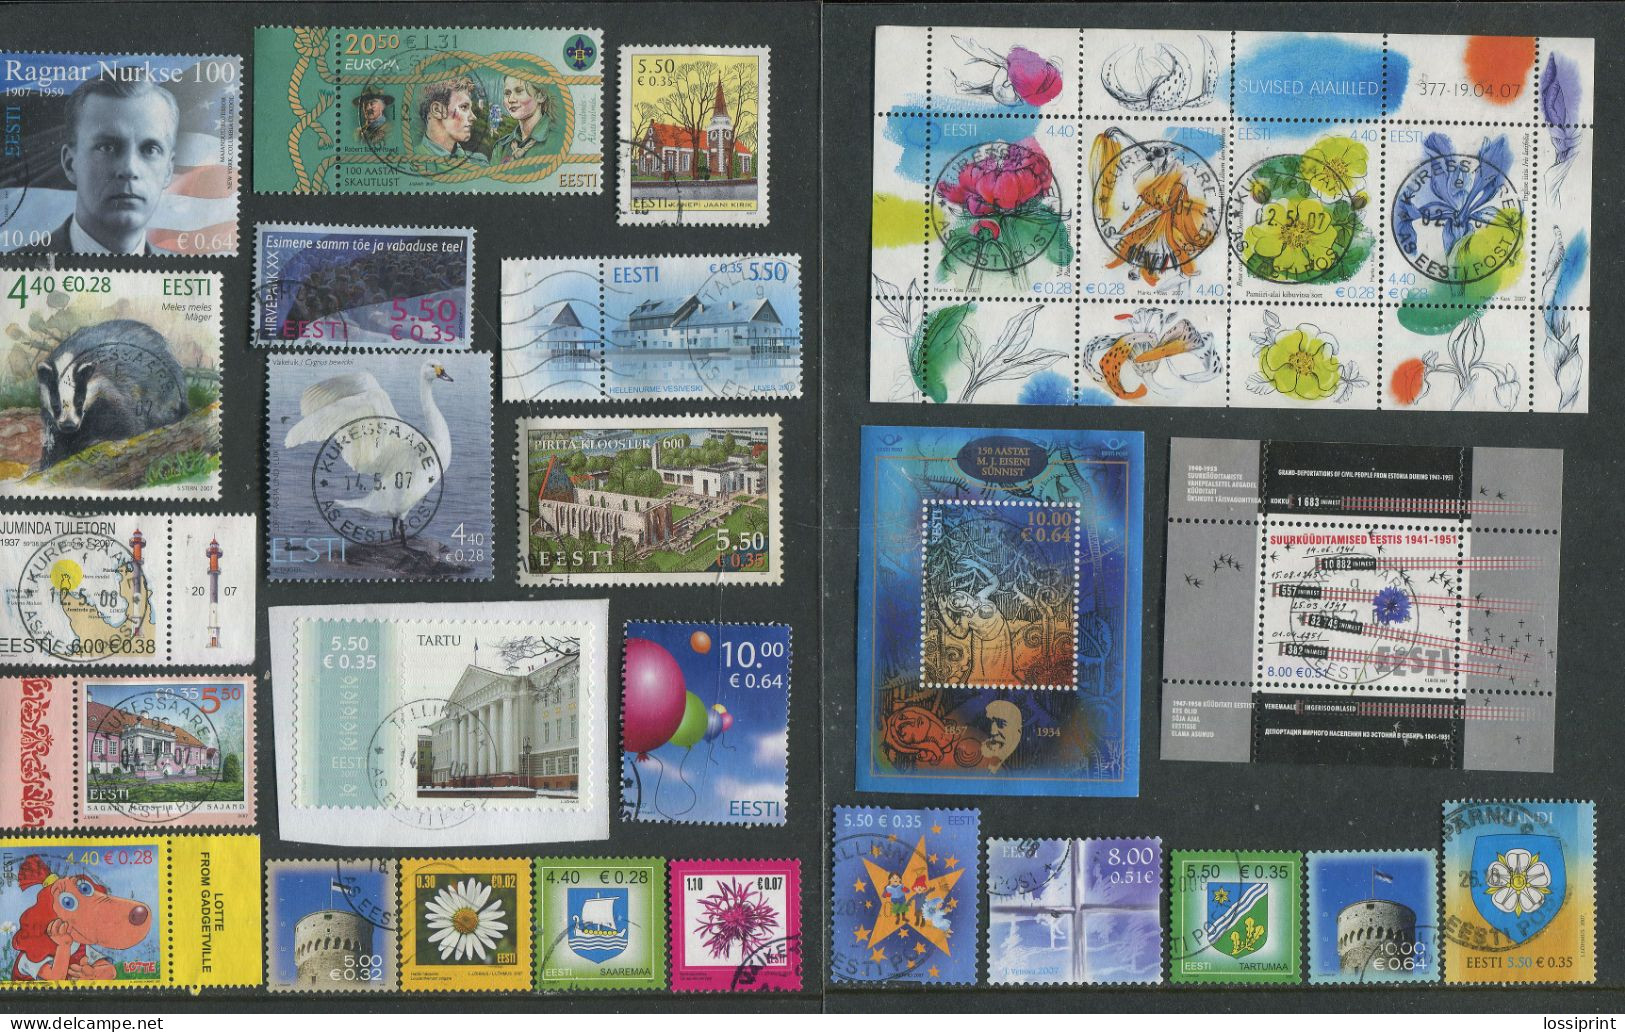 Estonia:Used Stamps And Blocks Full Year Set 2007 - Estonia